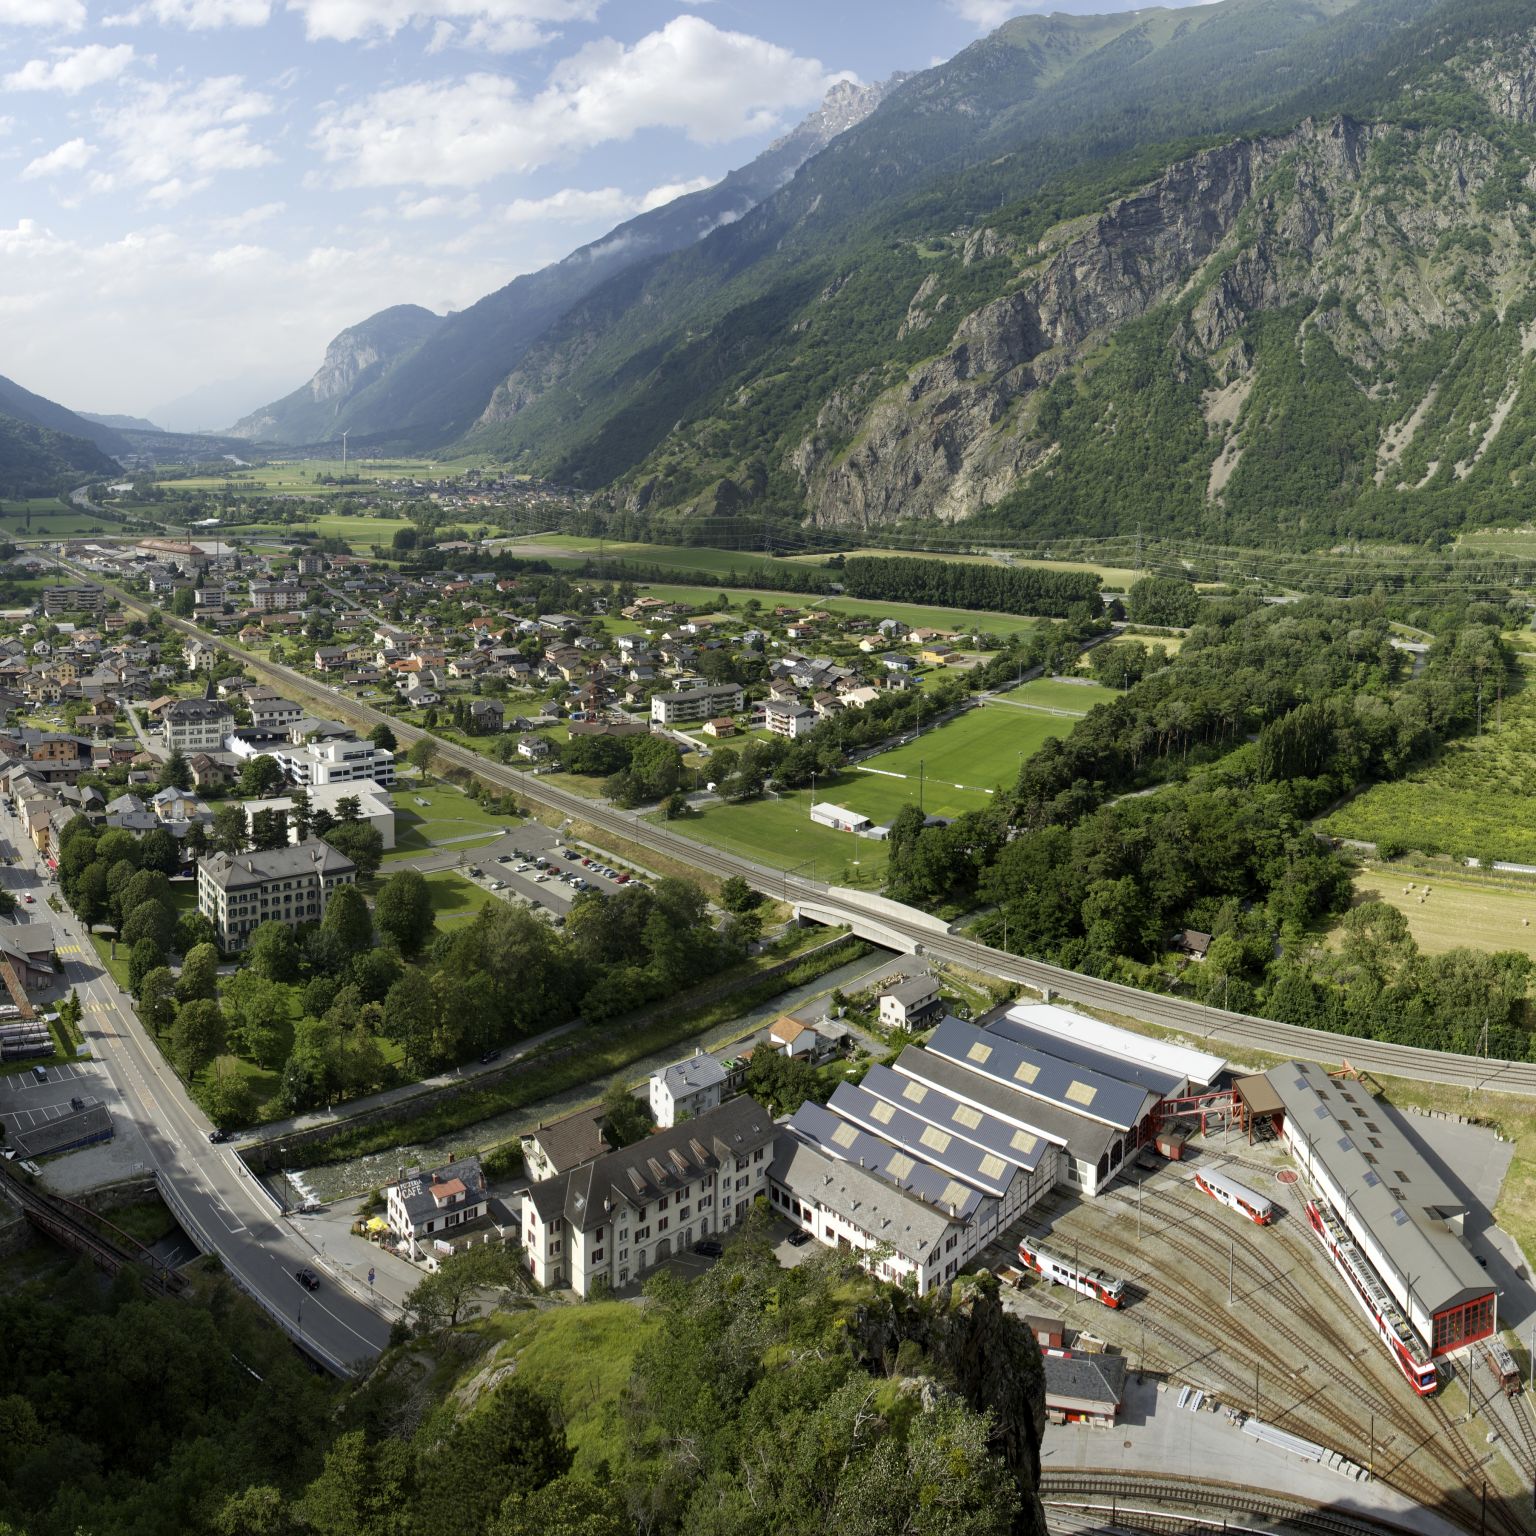 The village of Vernayaz seen from above with the Cascade de la Pissevache visible. Valais, Switzerland